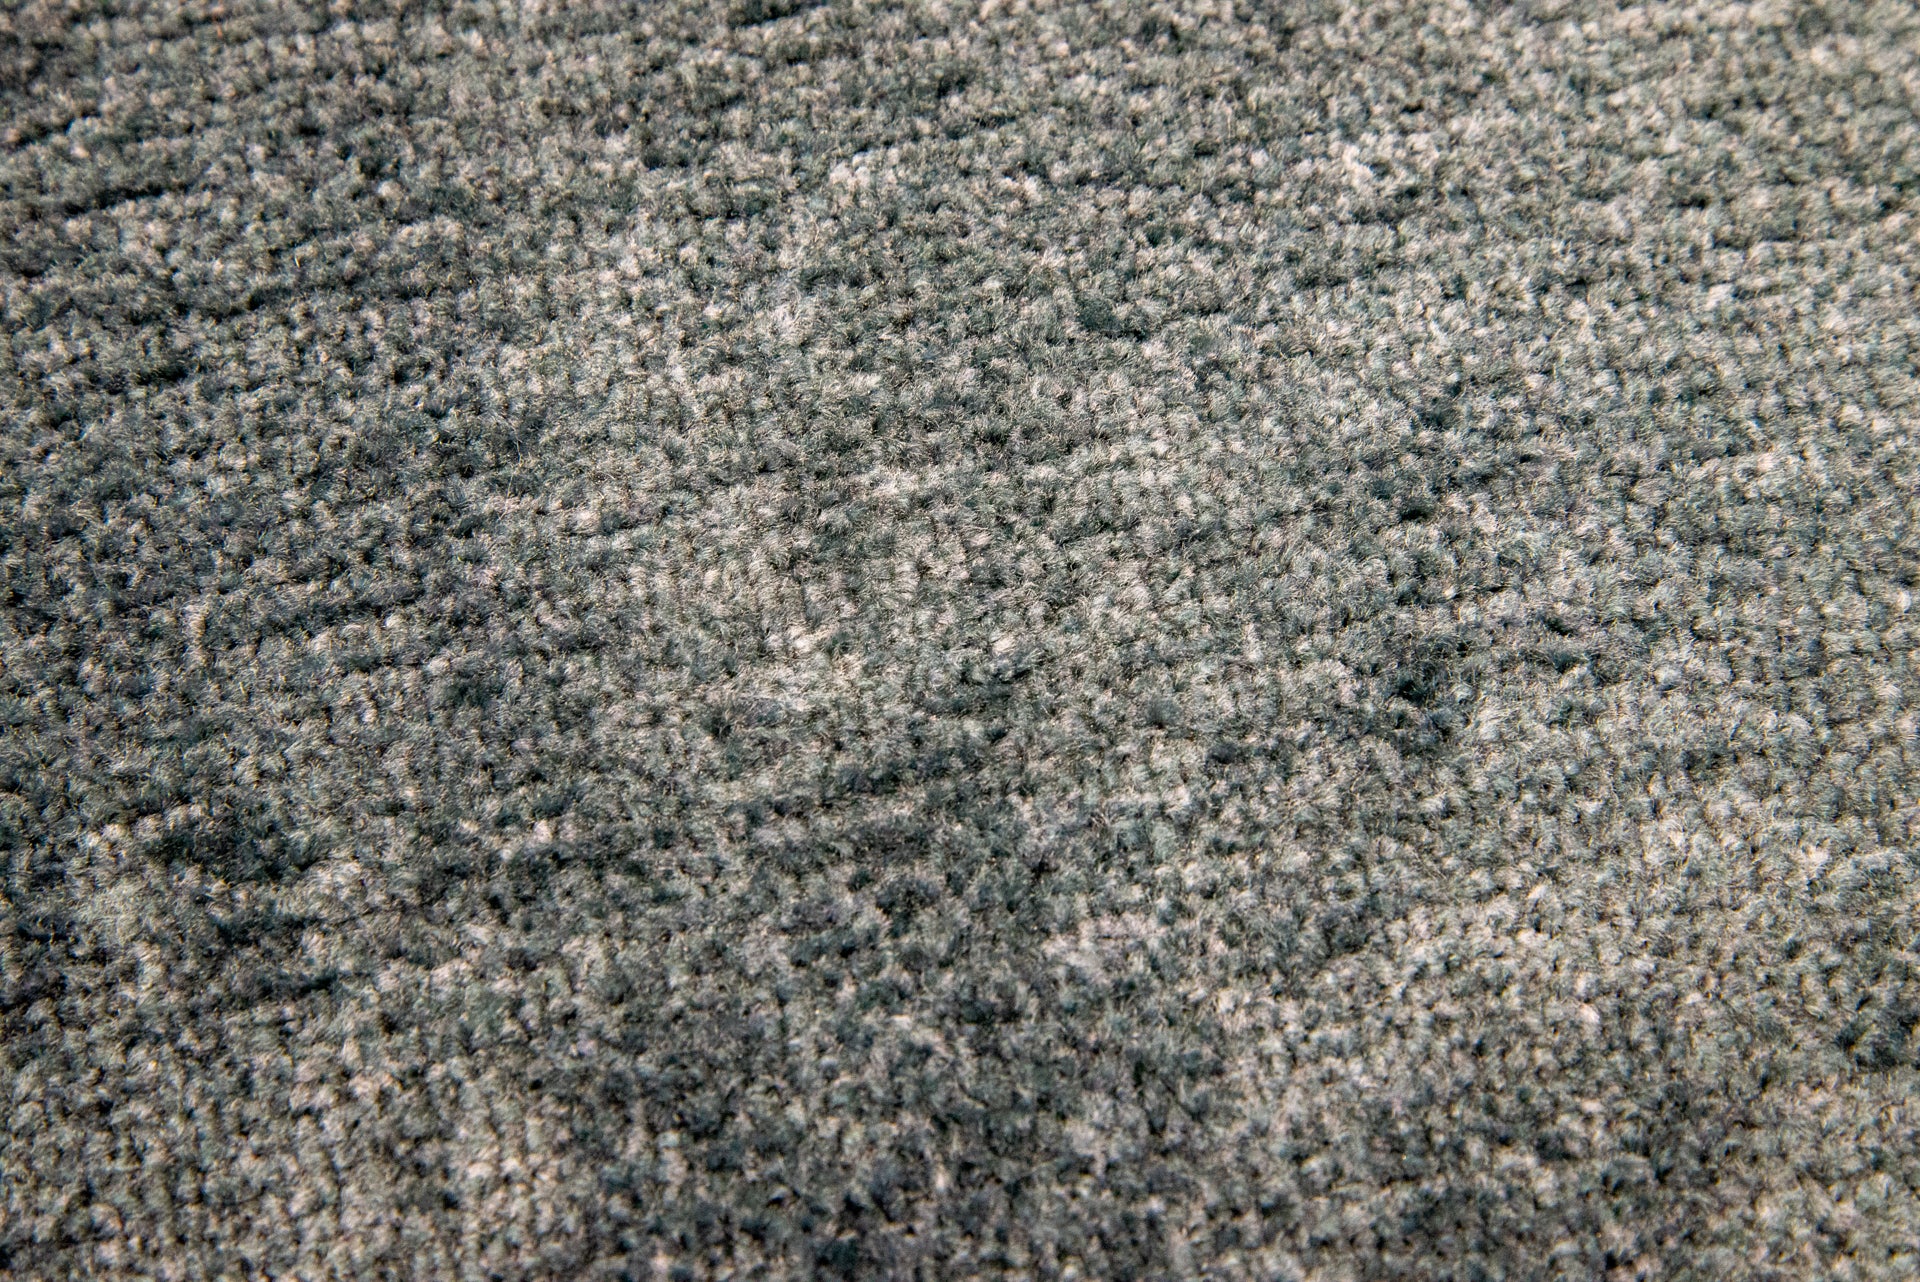 Dyson V11 Outsize carpet close up after Eco mode